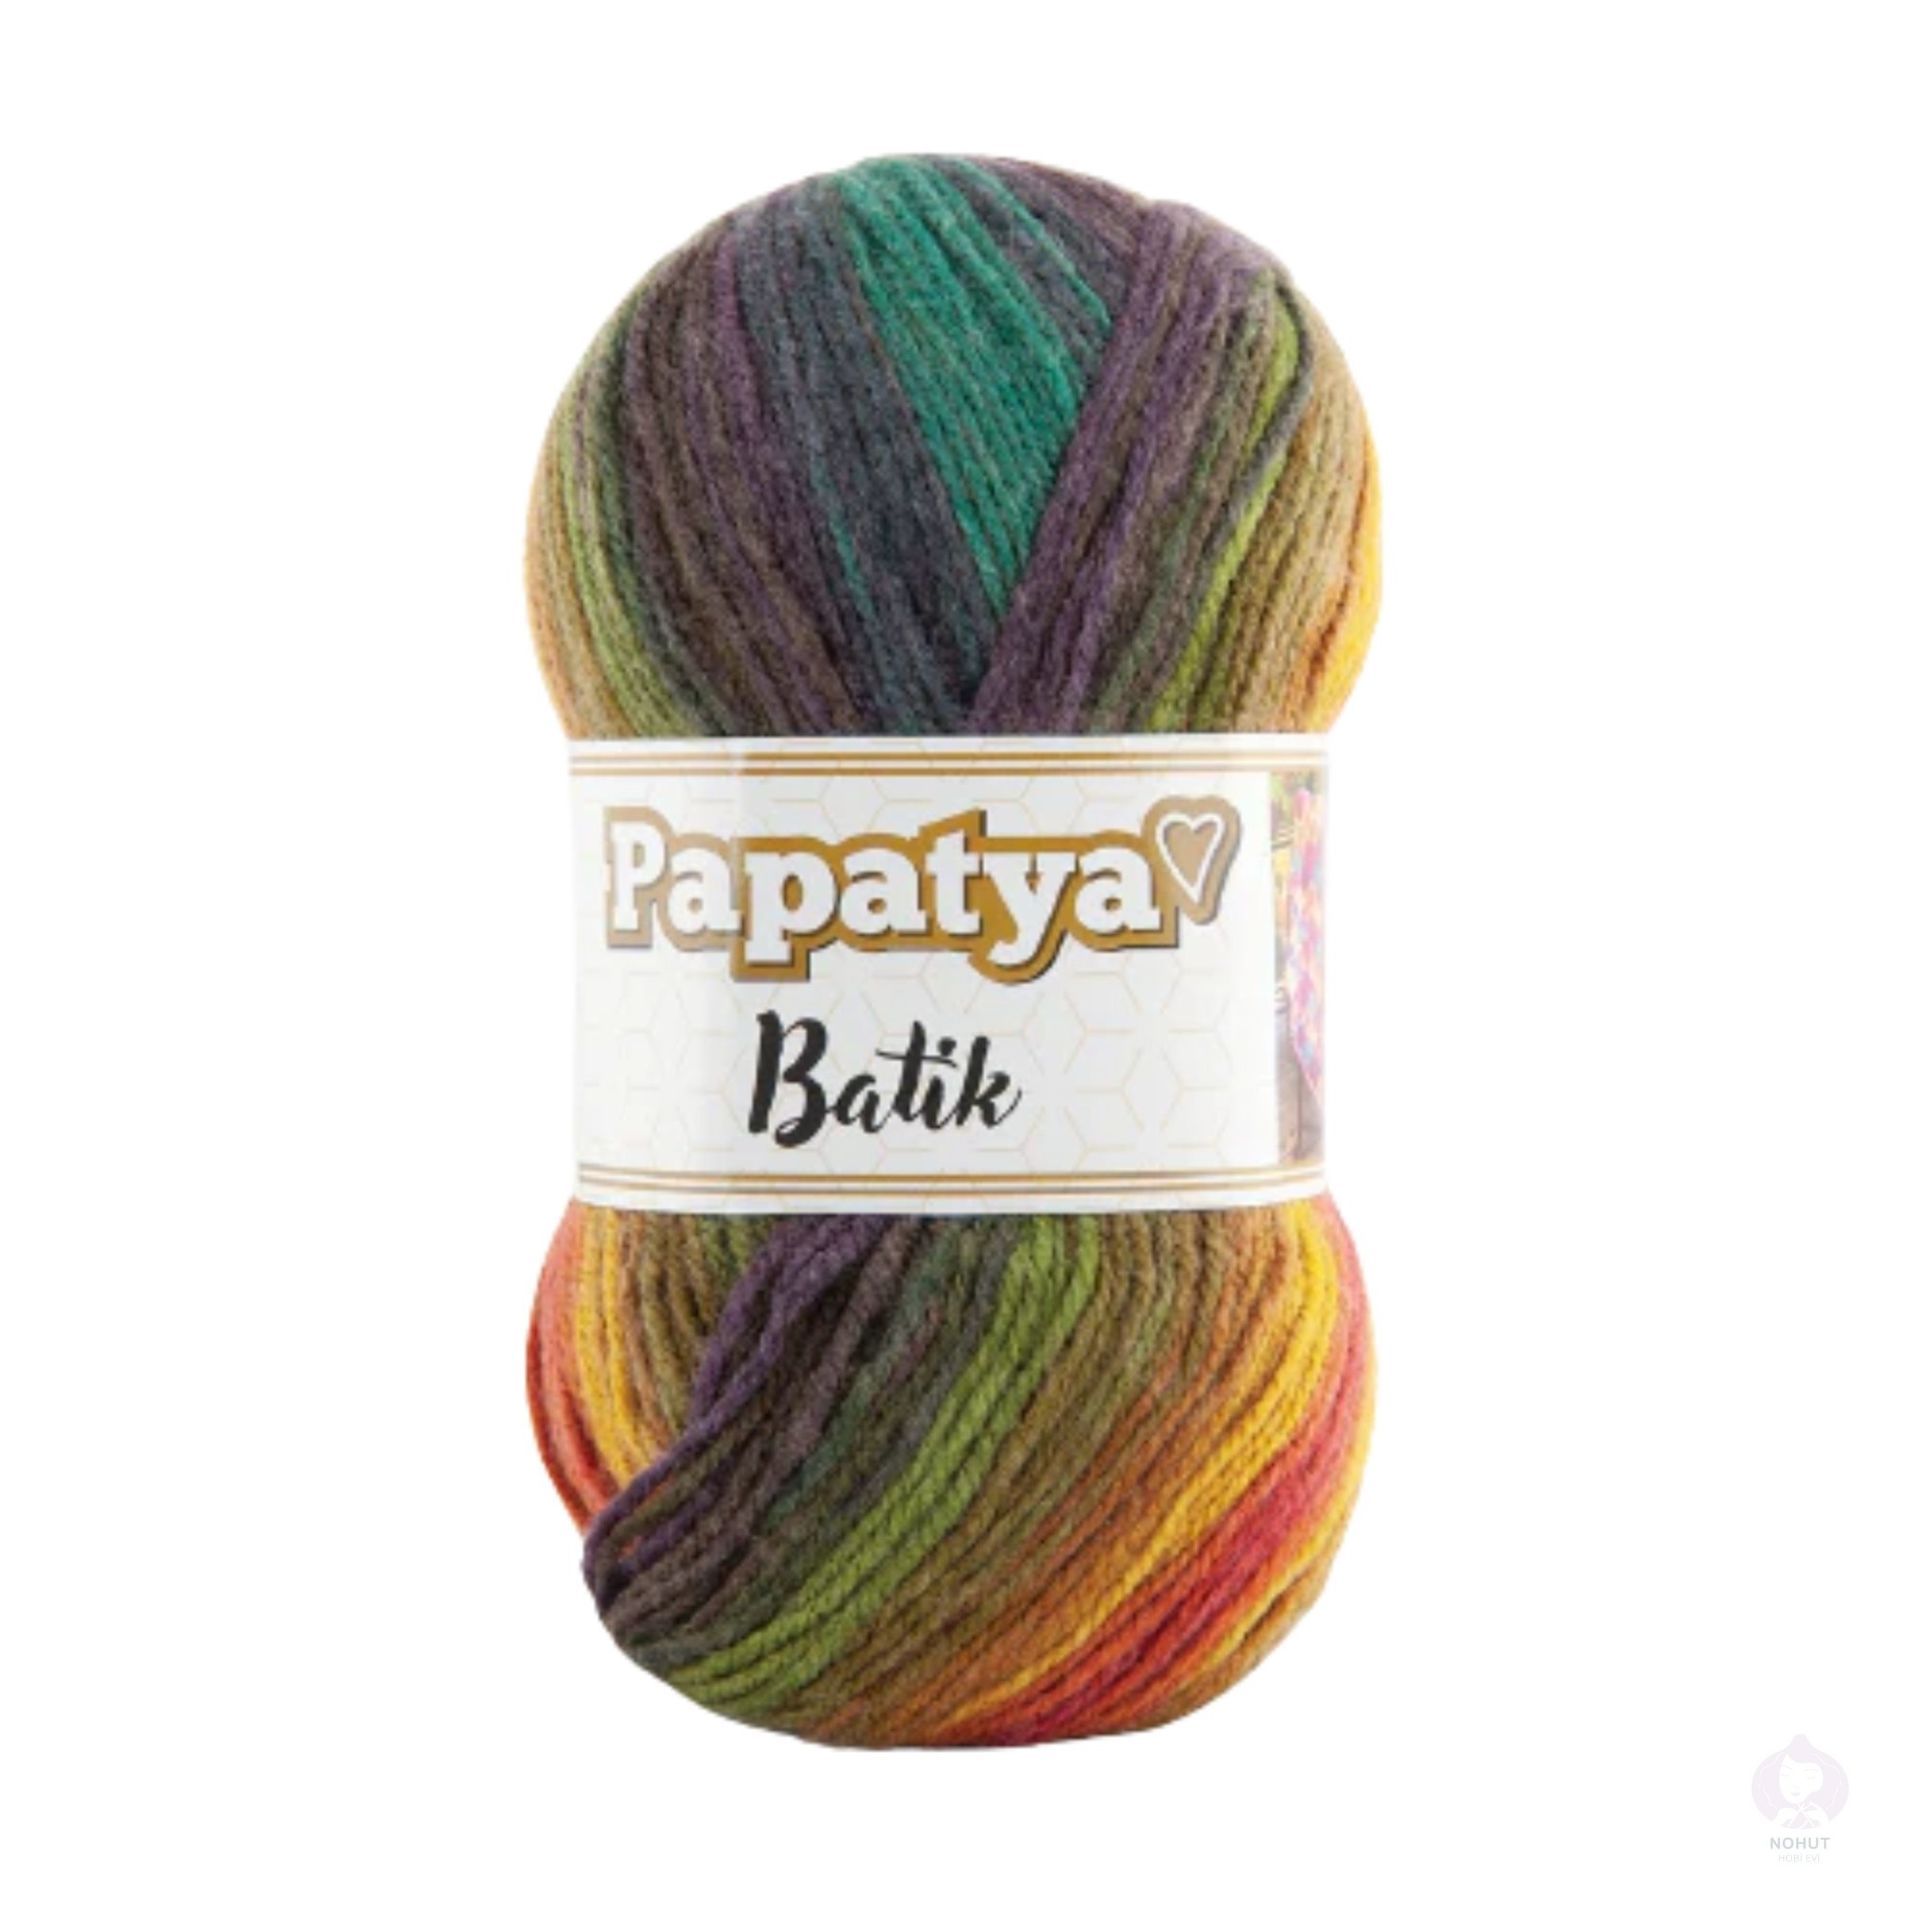 Papatya Batik 554-43